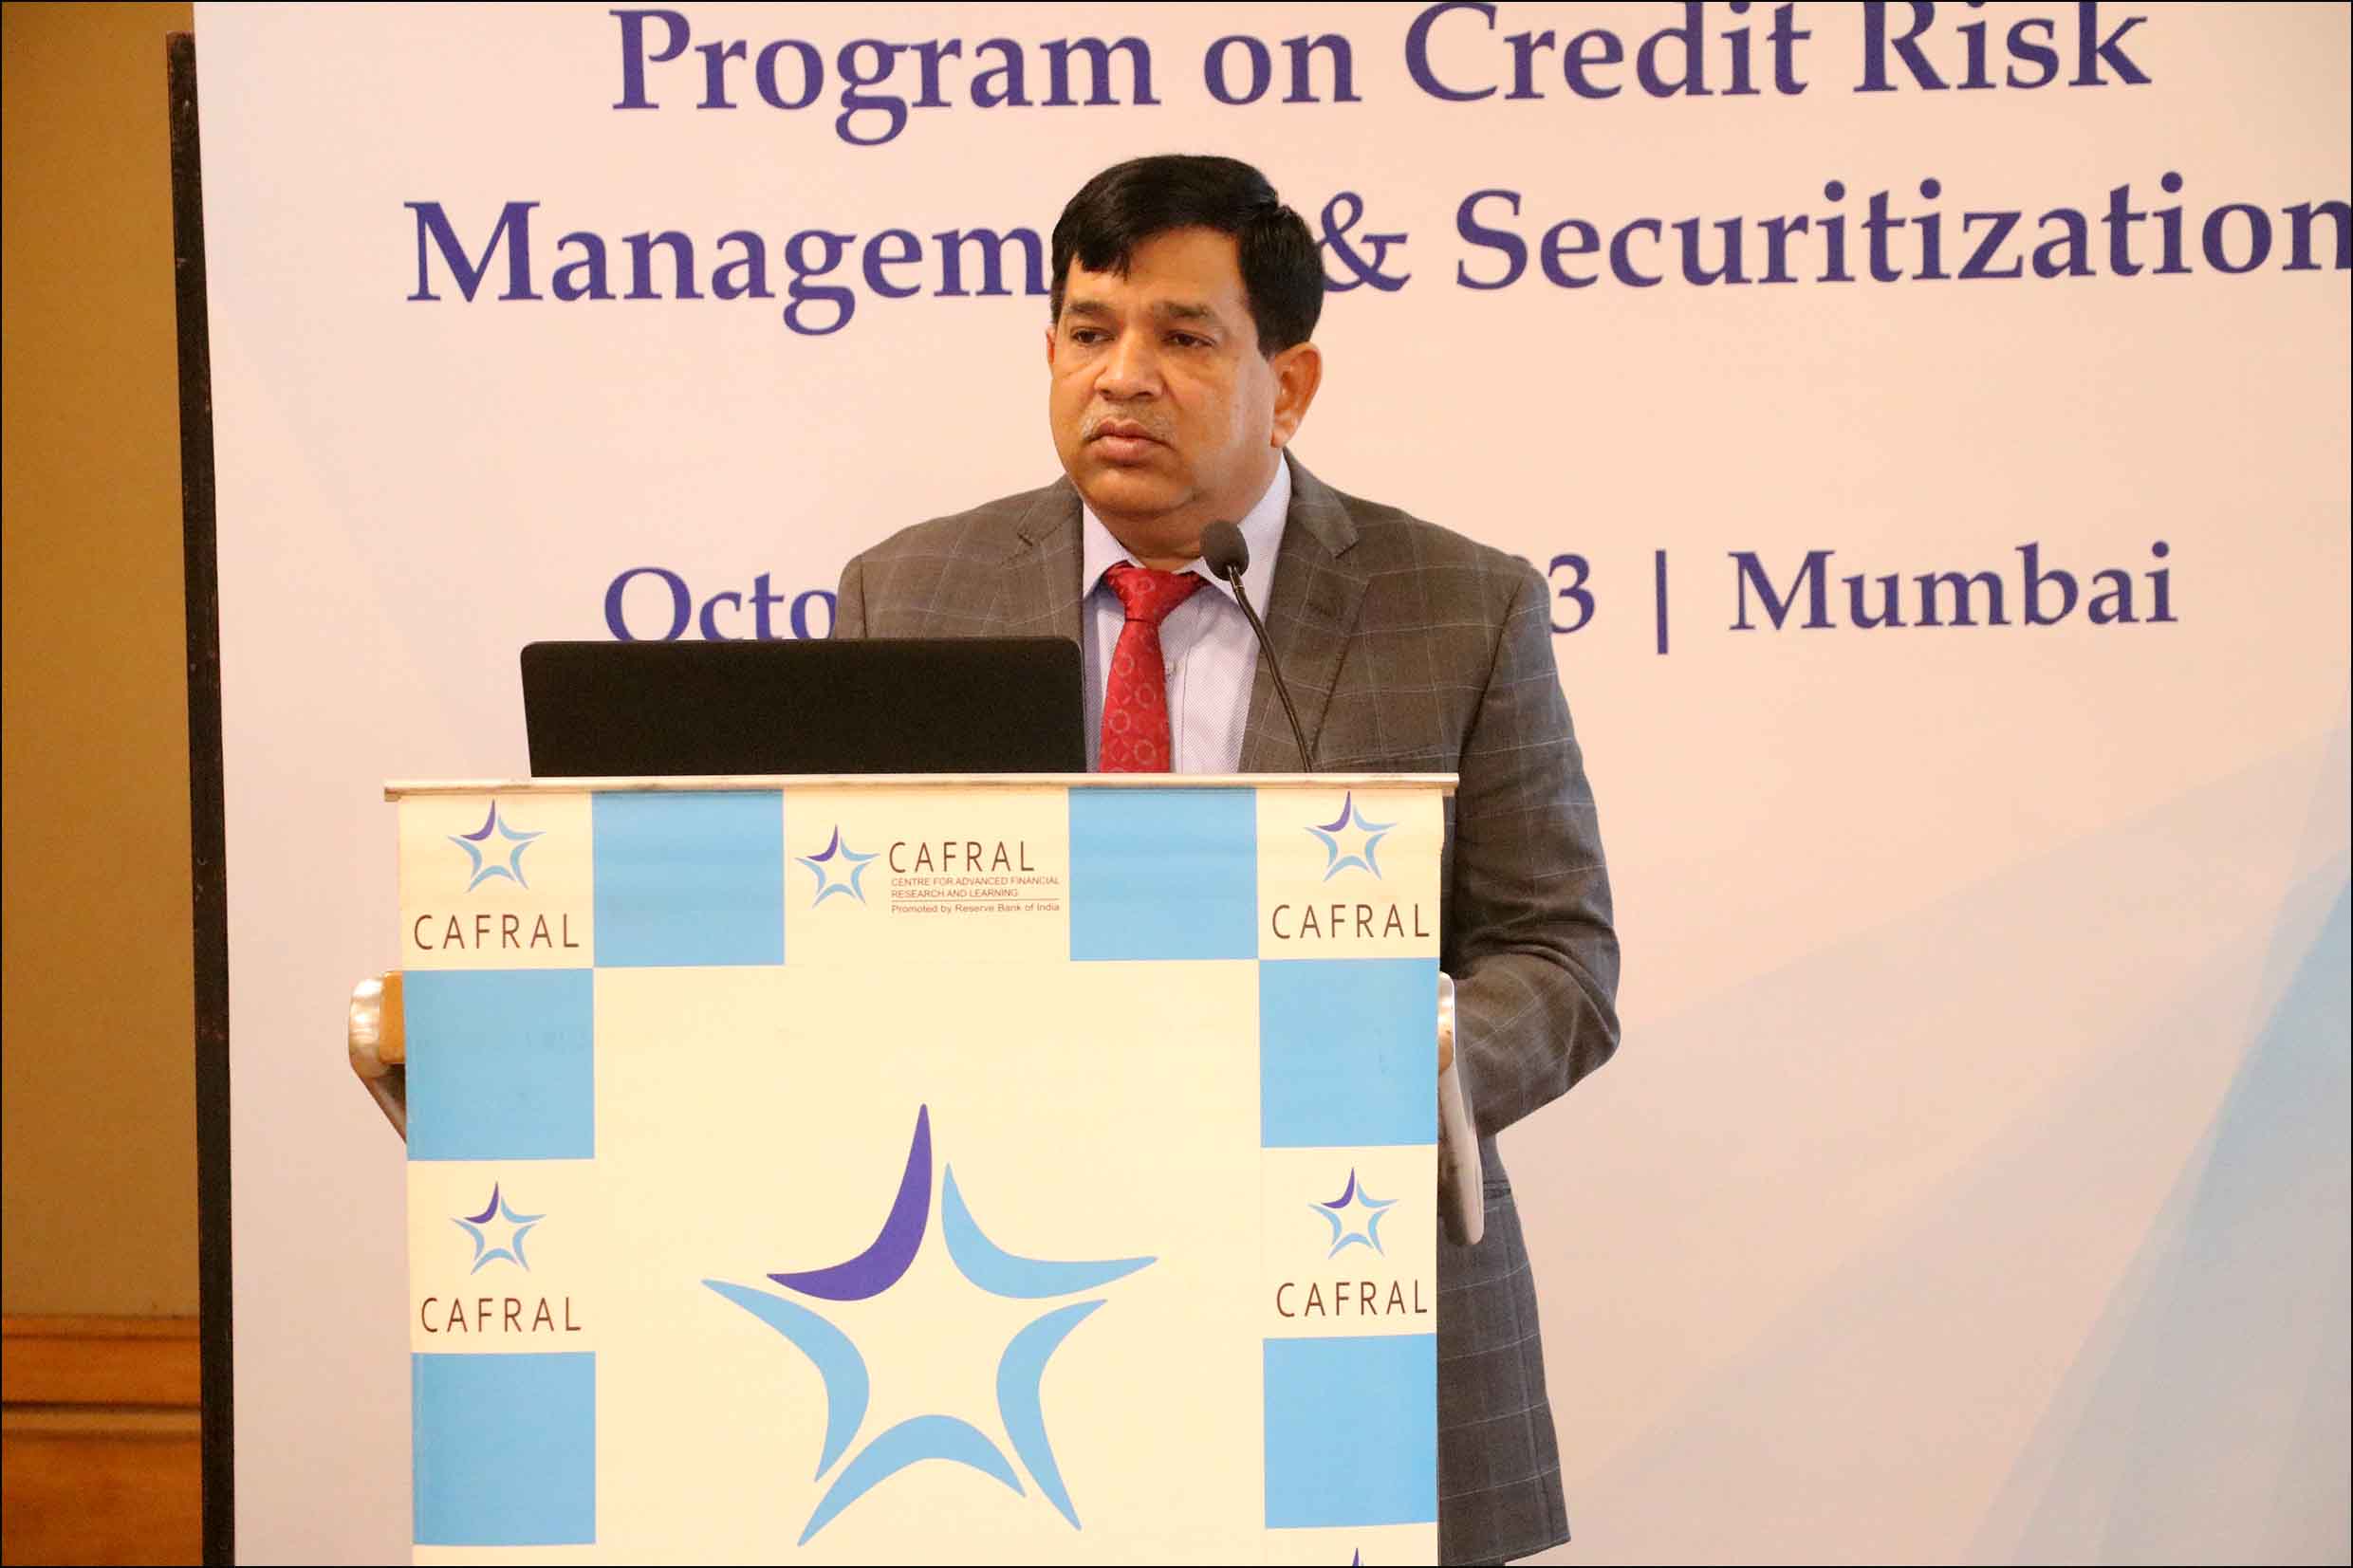 Rajesh Agrawal, Partner, Deloitte India